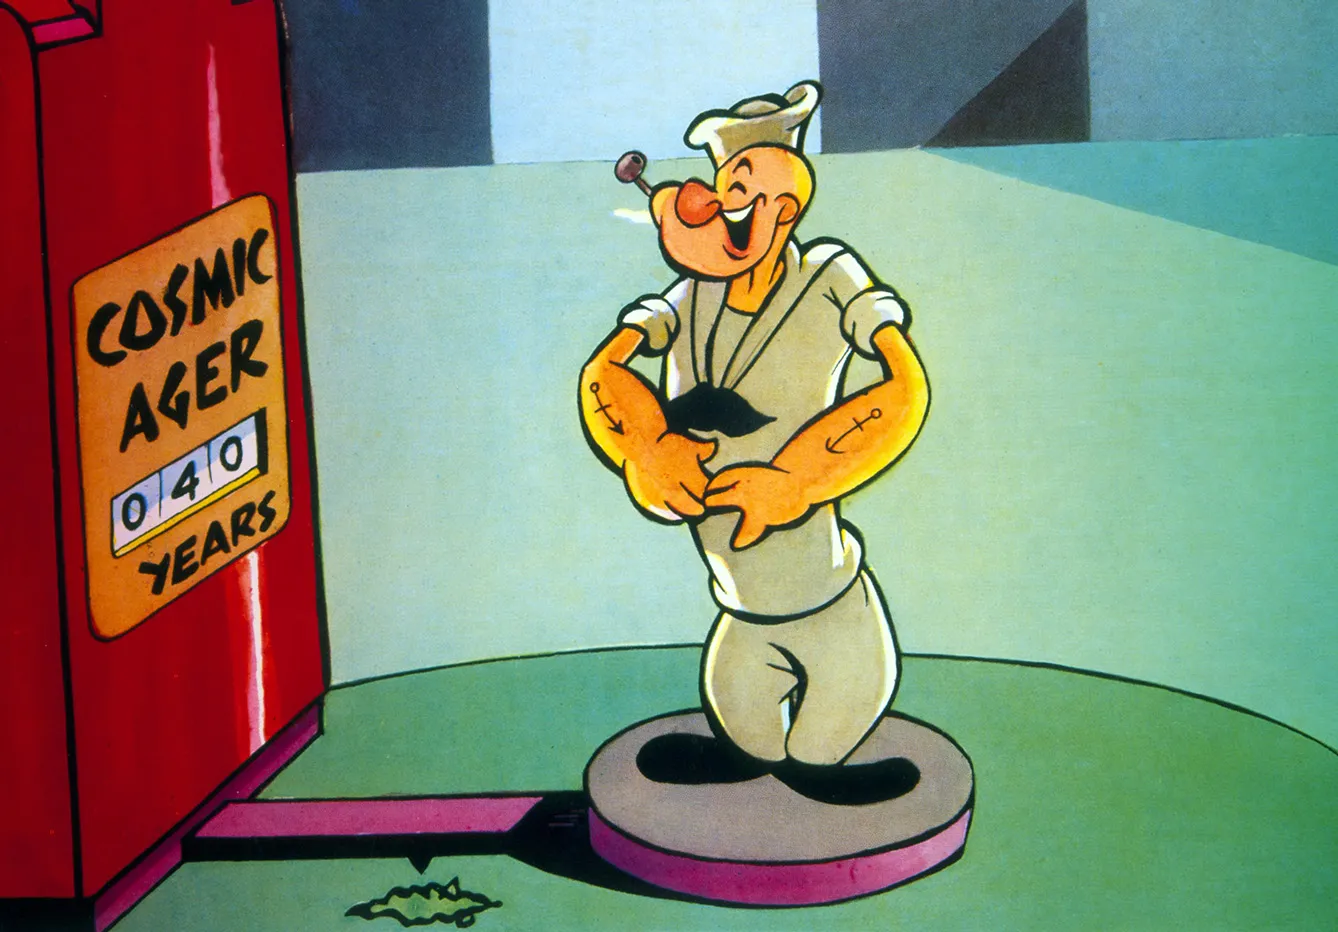 Popeye, the cartoon character created by EC Segar.